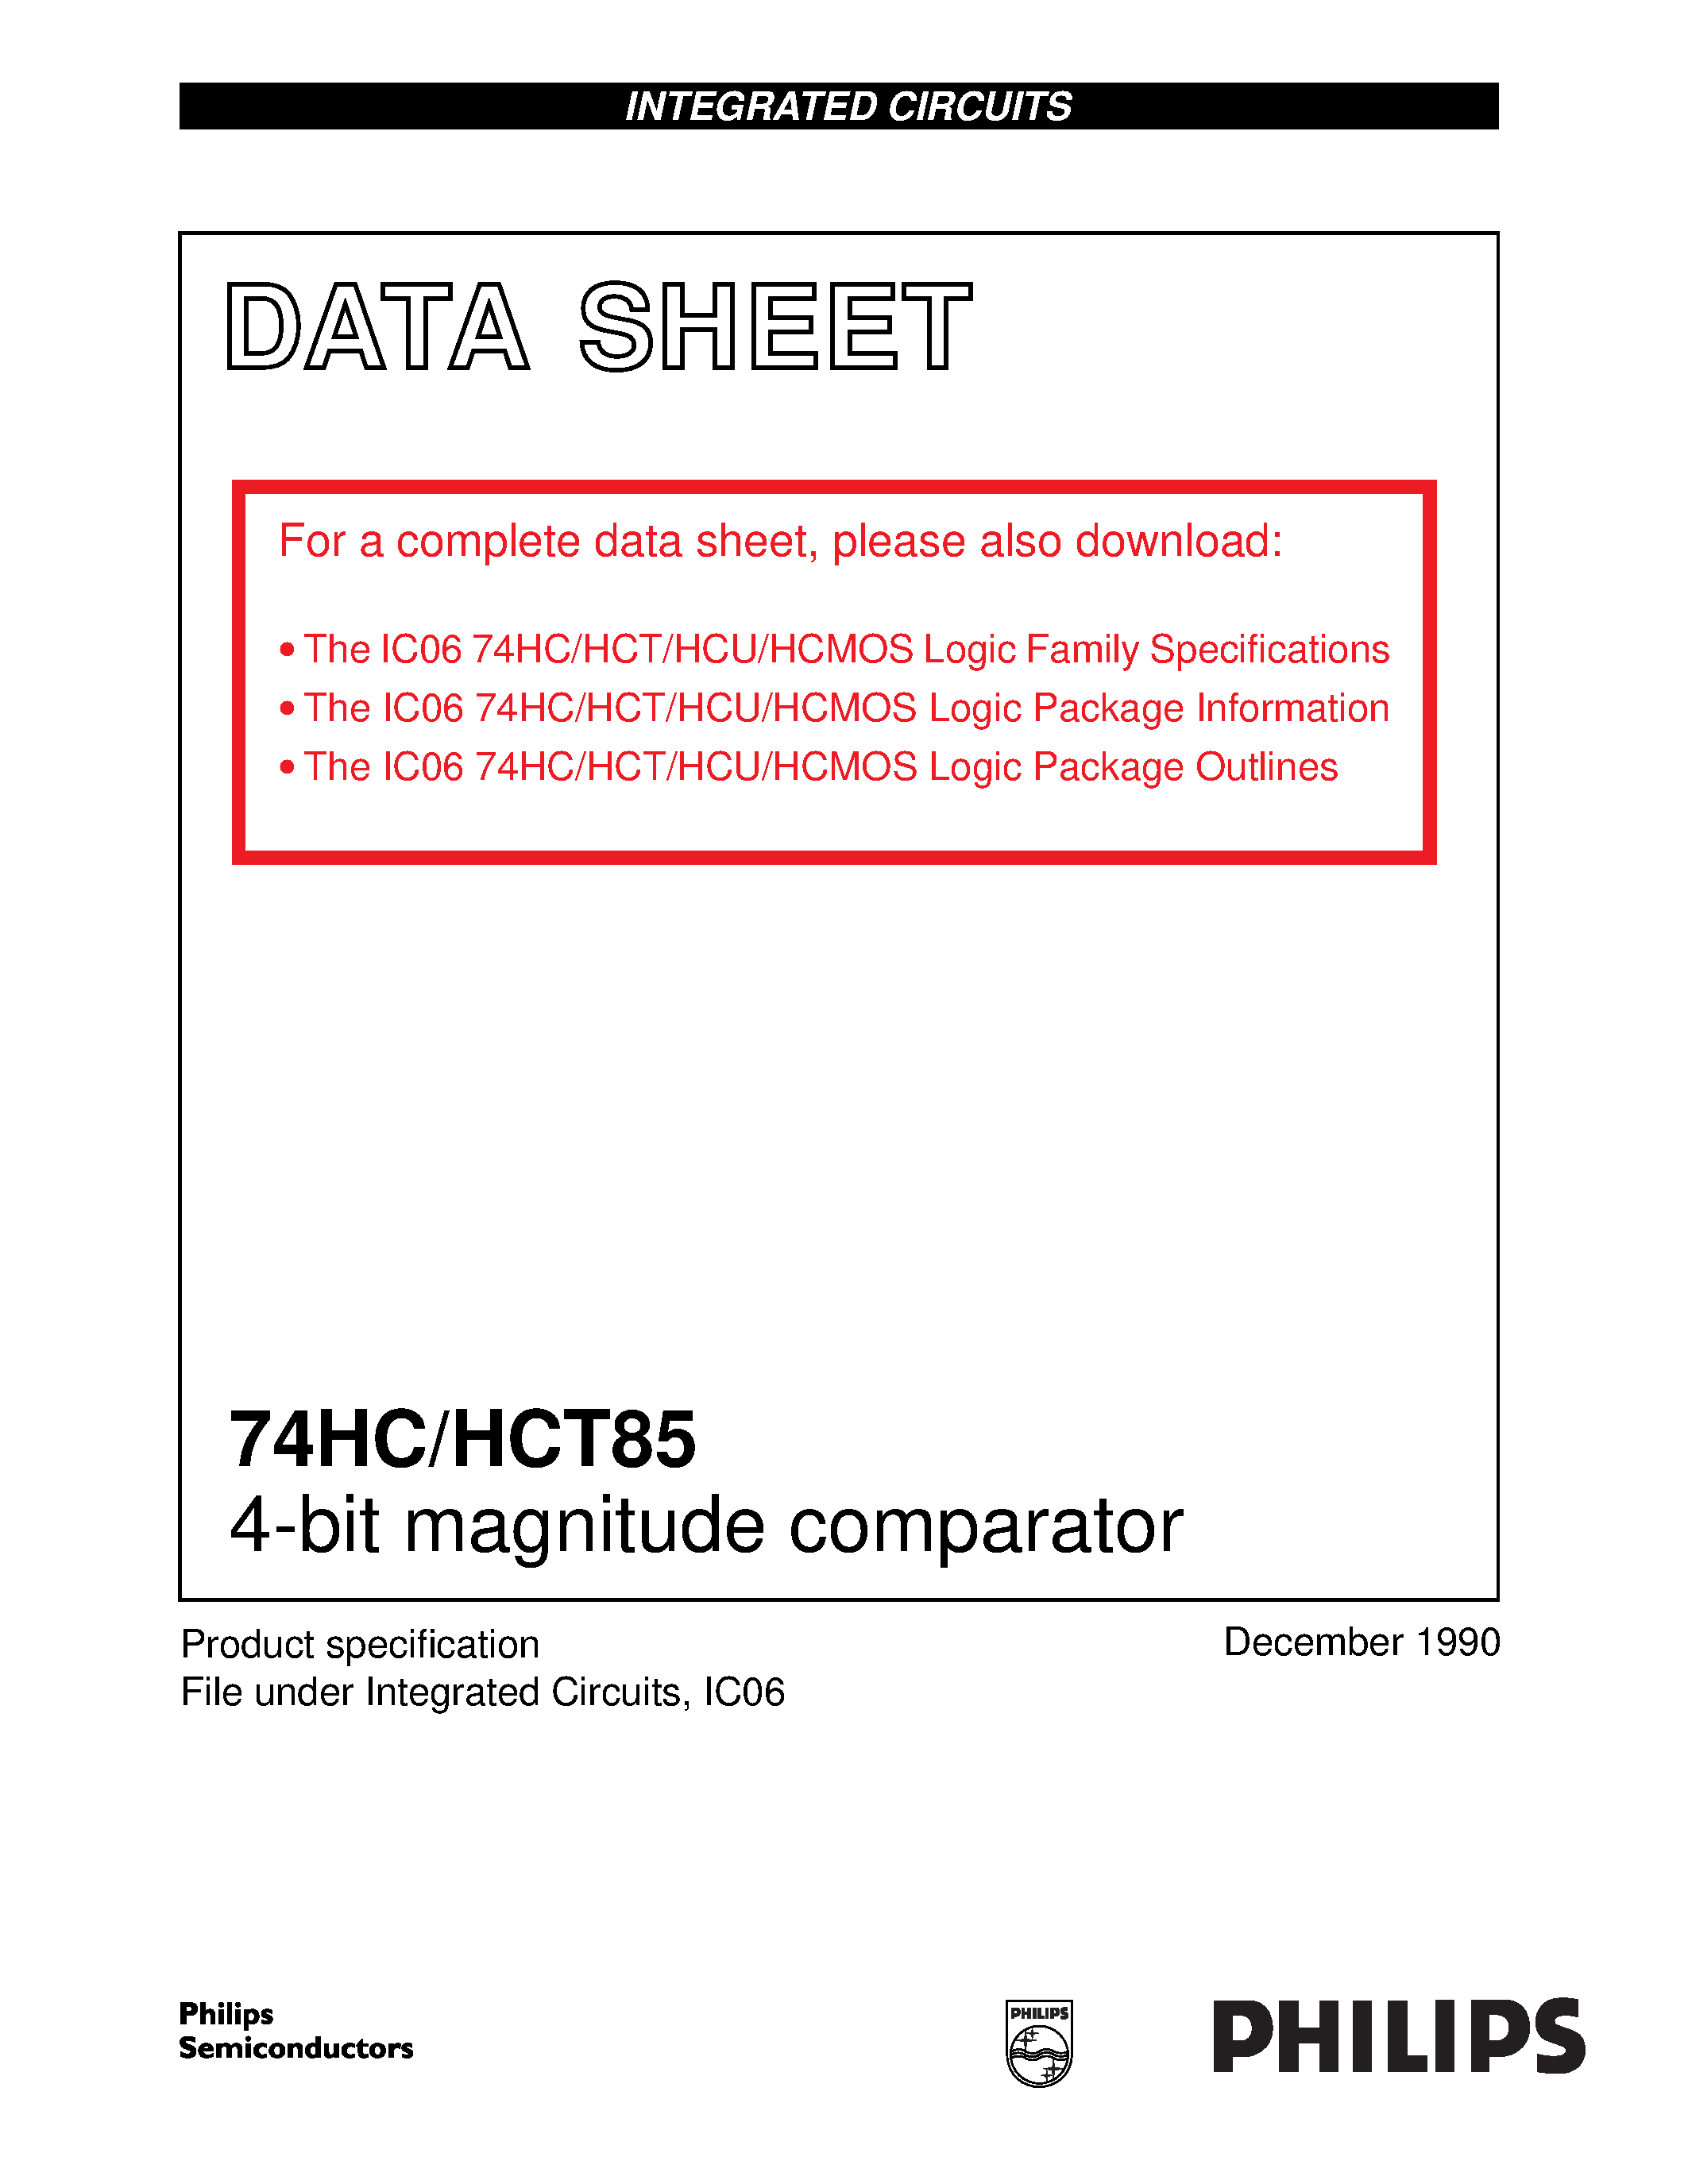 Даташит 74HCT85 - 4-bit magnitude comparator страница 1